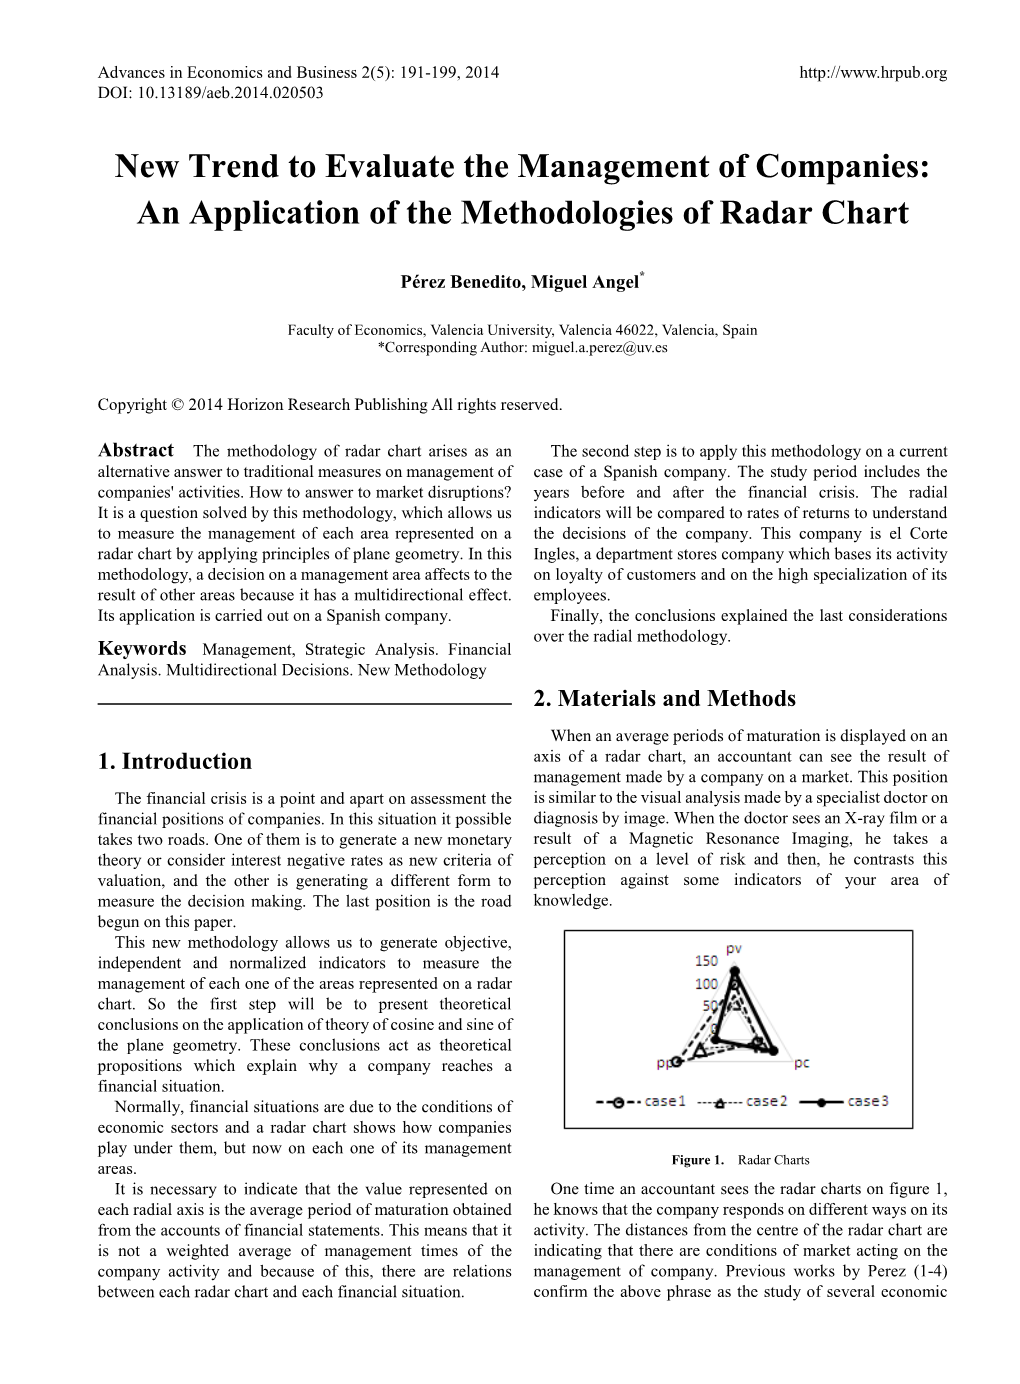 An Application of the Methodologies of Radar Chart